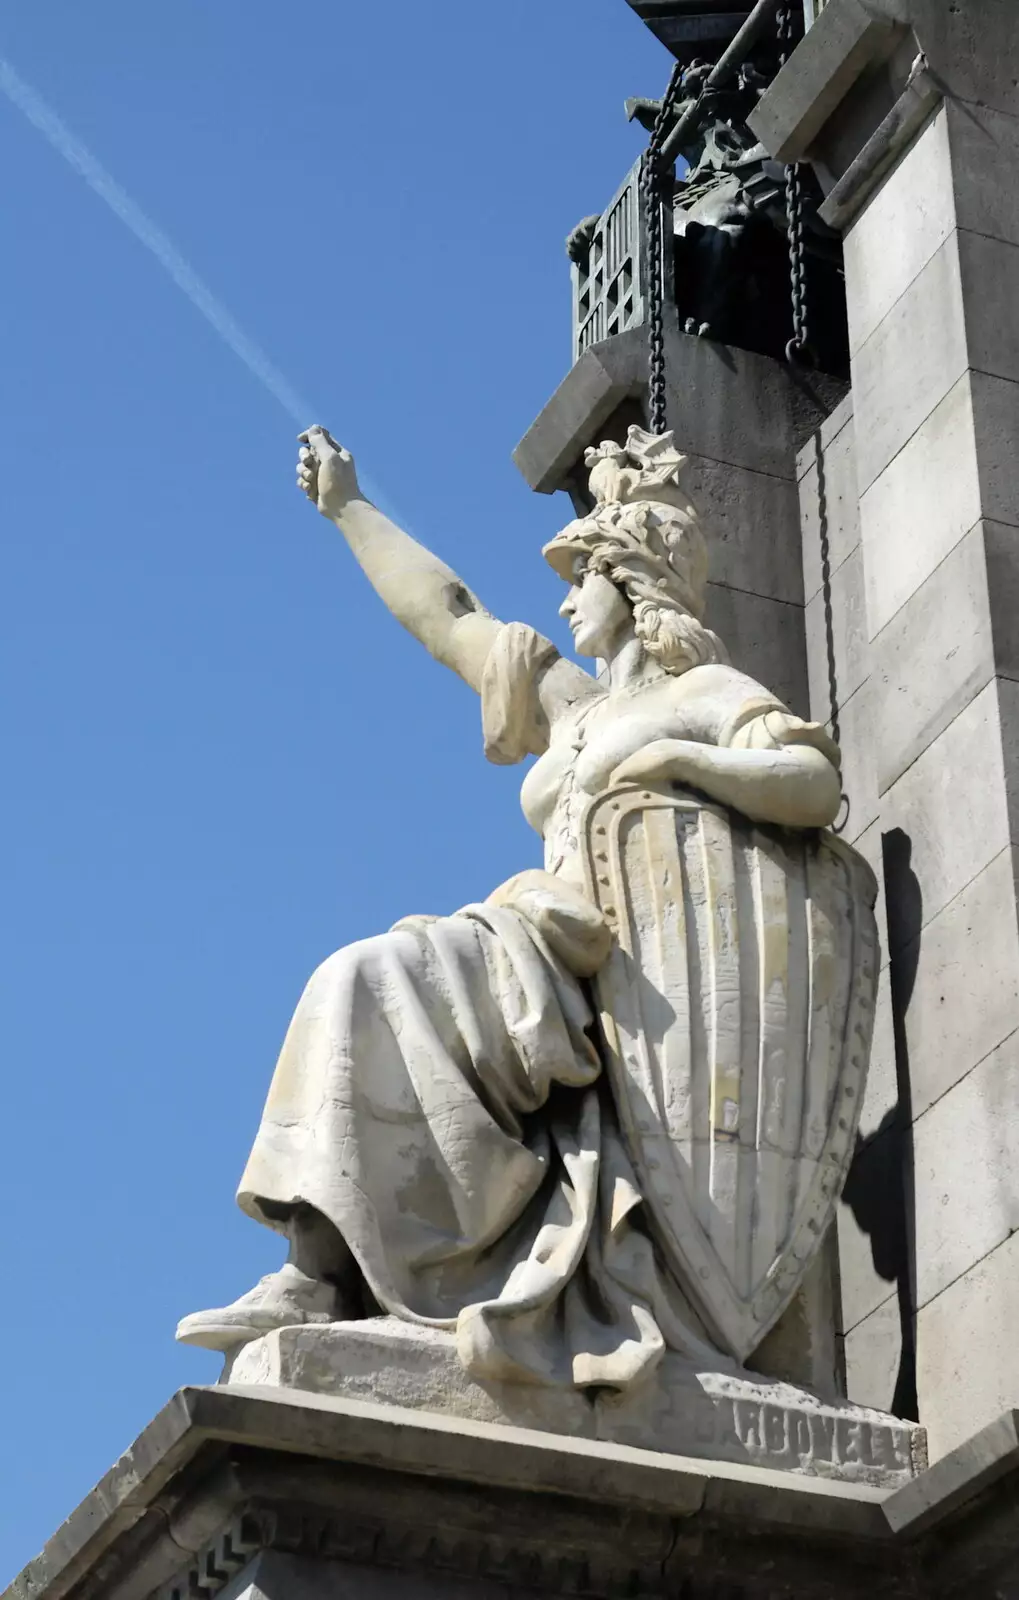 A statue is throwing a contrail javelin, from Montjuïc and Sant Feliu de Guíxols, Barcelona, Catalunya - 30th April 2005